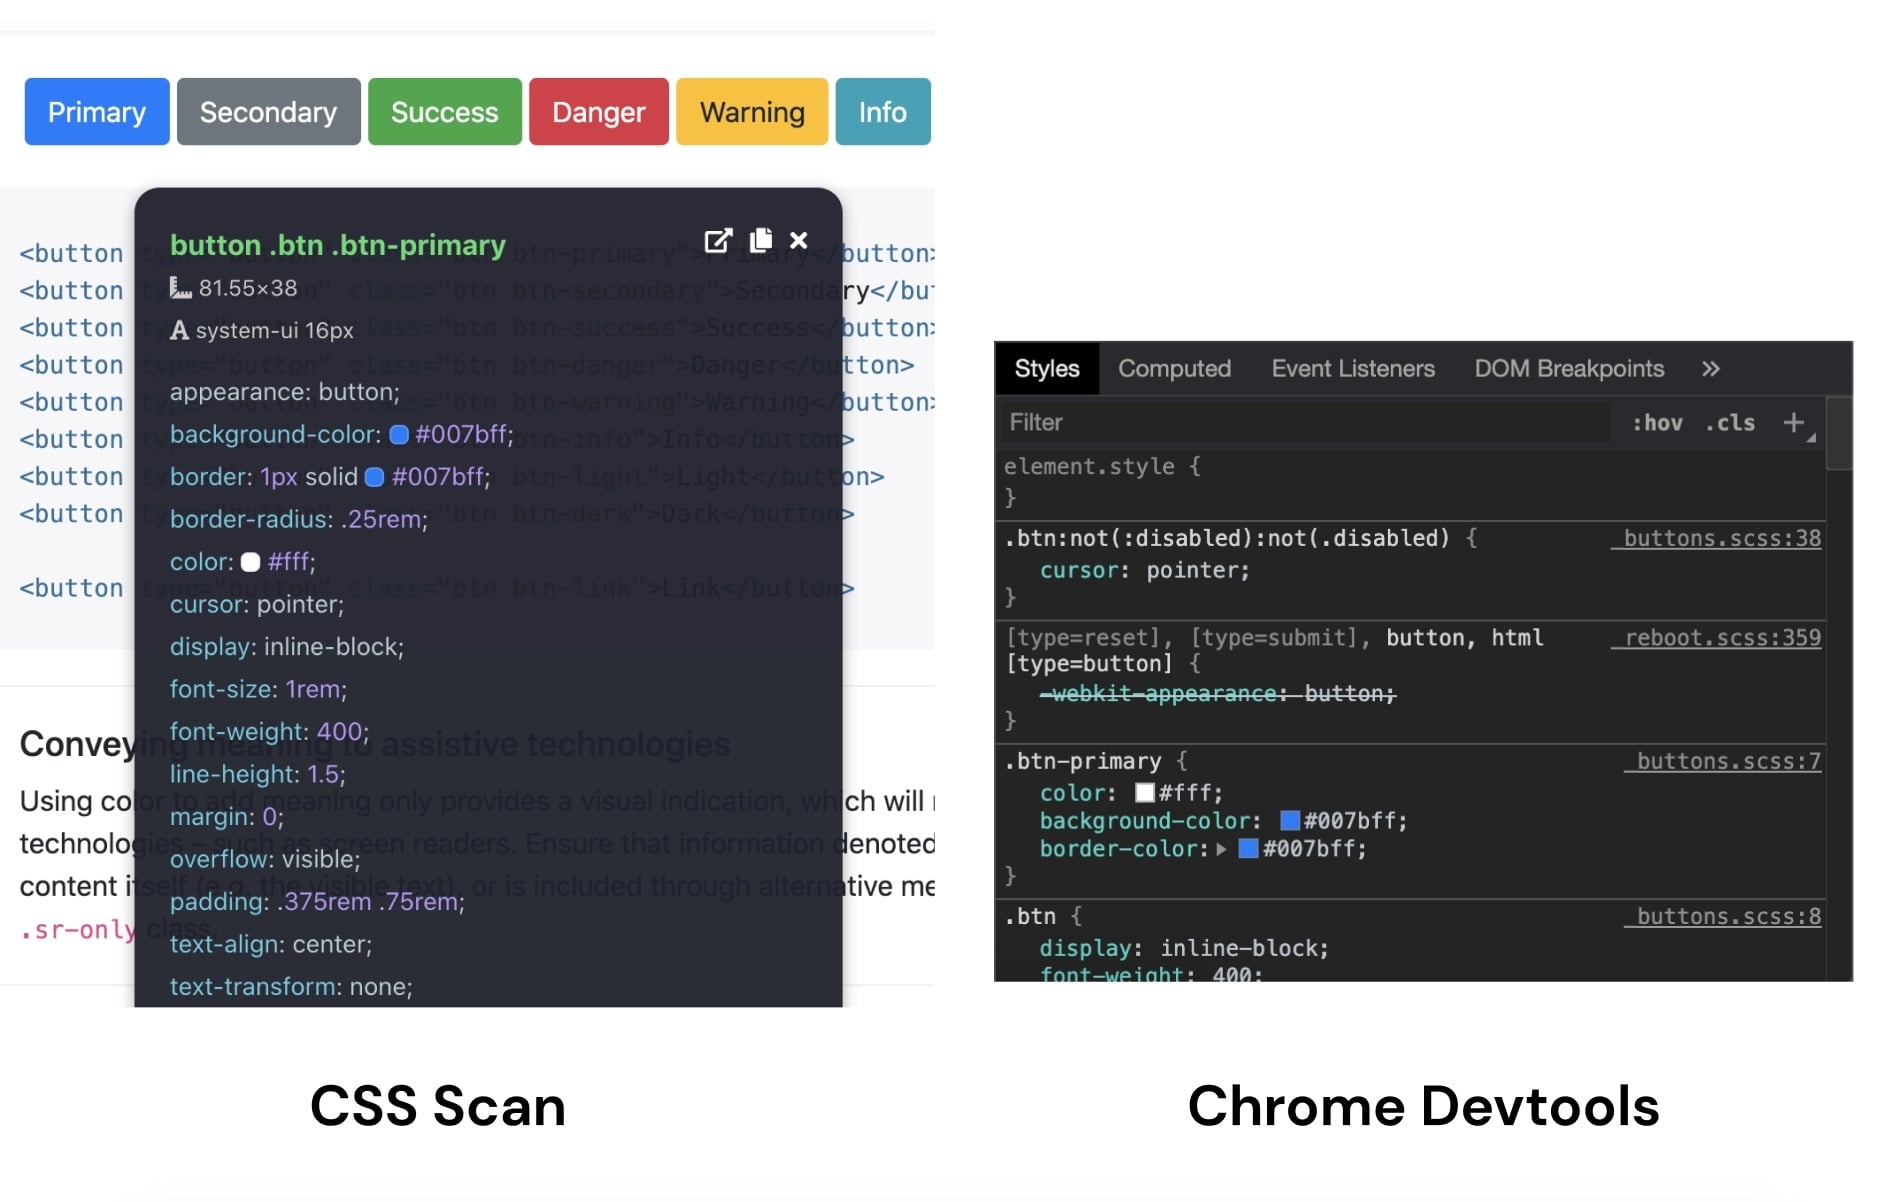 Side by side comparison - CSS Scan vs Chrome Devtools